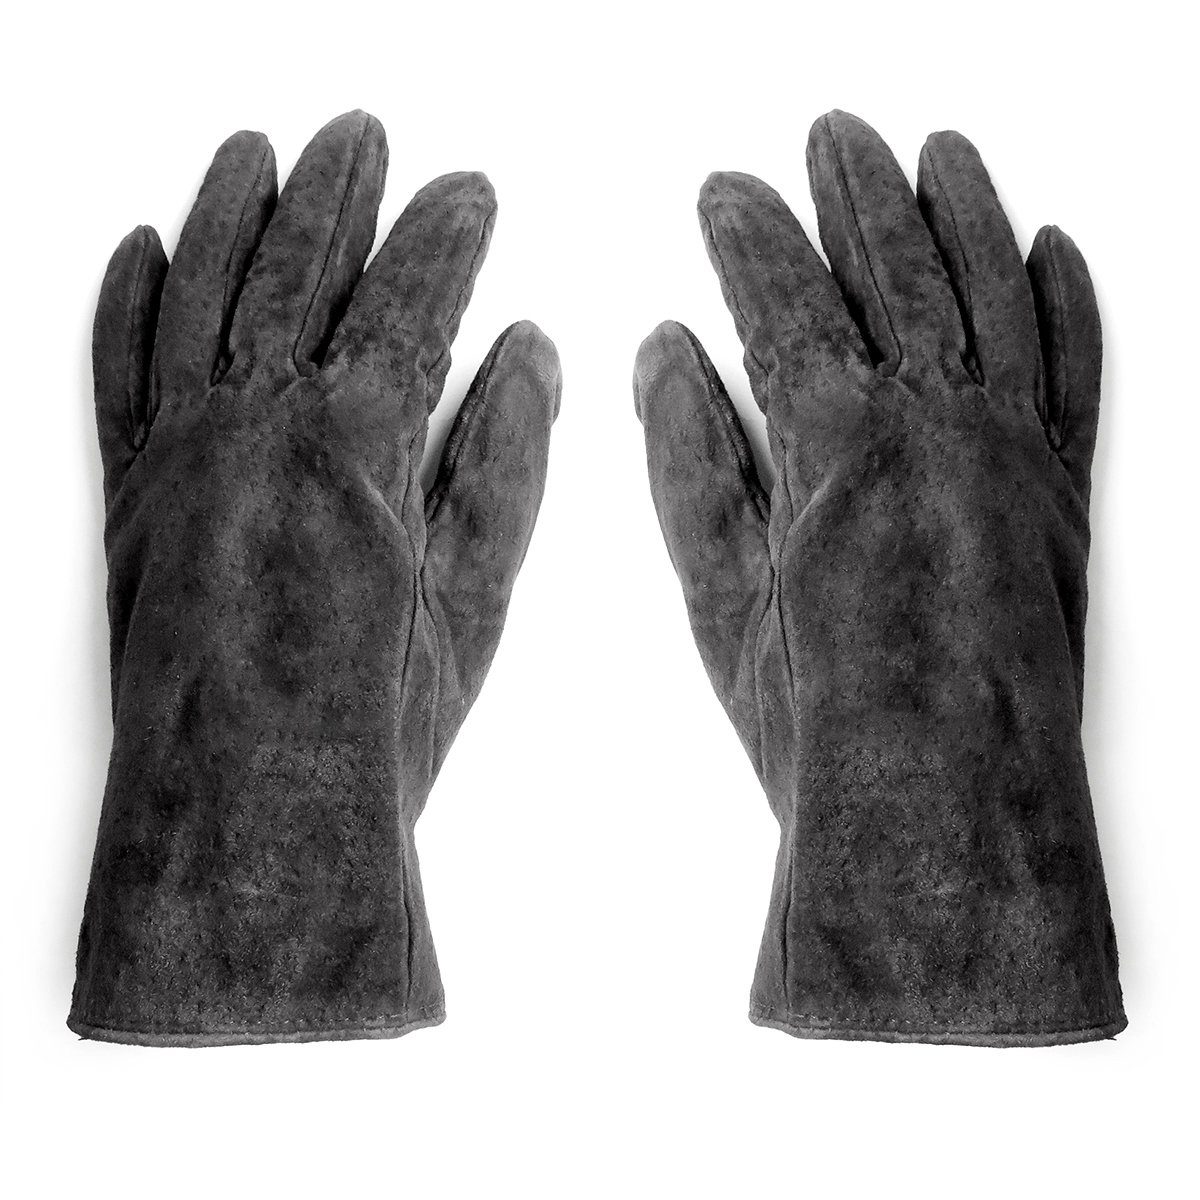 Sonia Originelli Strickhandschuhe Damenhandschuhe Leder Schmal Winter Finger Gefüttert Schmal geschnitten, Farben können abweichen schwarz